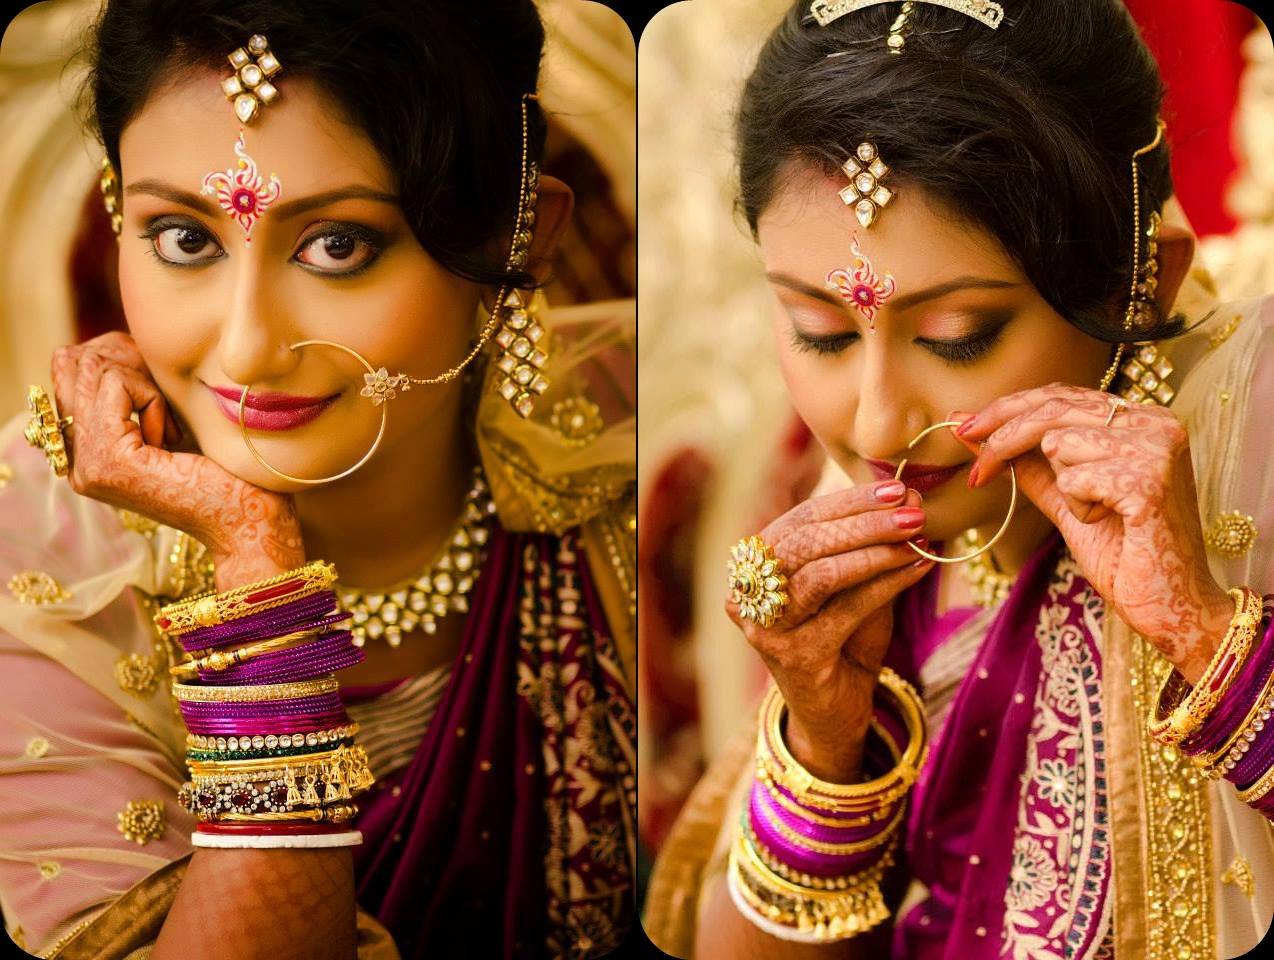 The Blushing bride: Sanandita Chakraverty - Deck and Dine